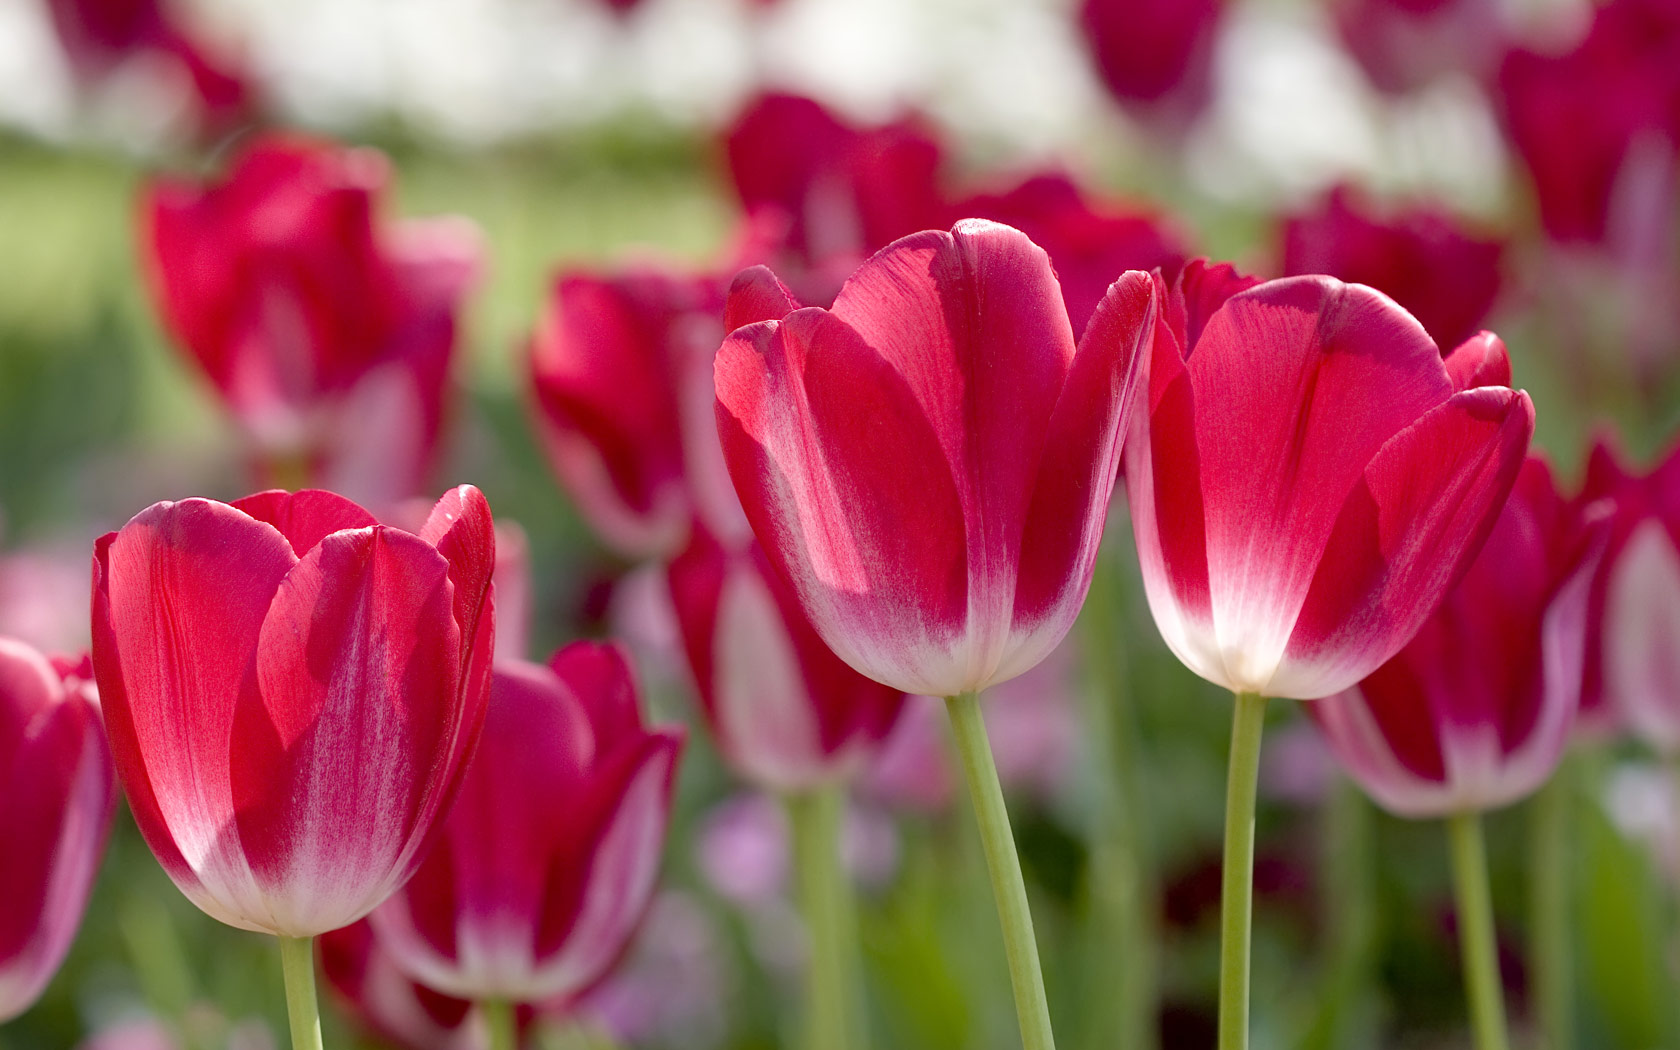 windowsacecomwallpaper screensavers tulip tulips screensaver spring